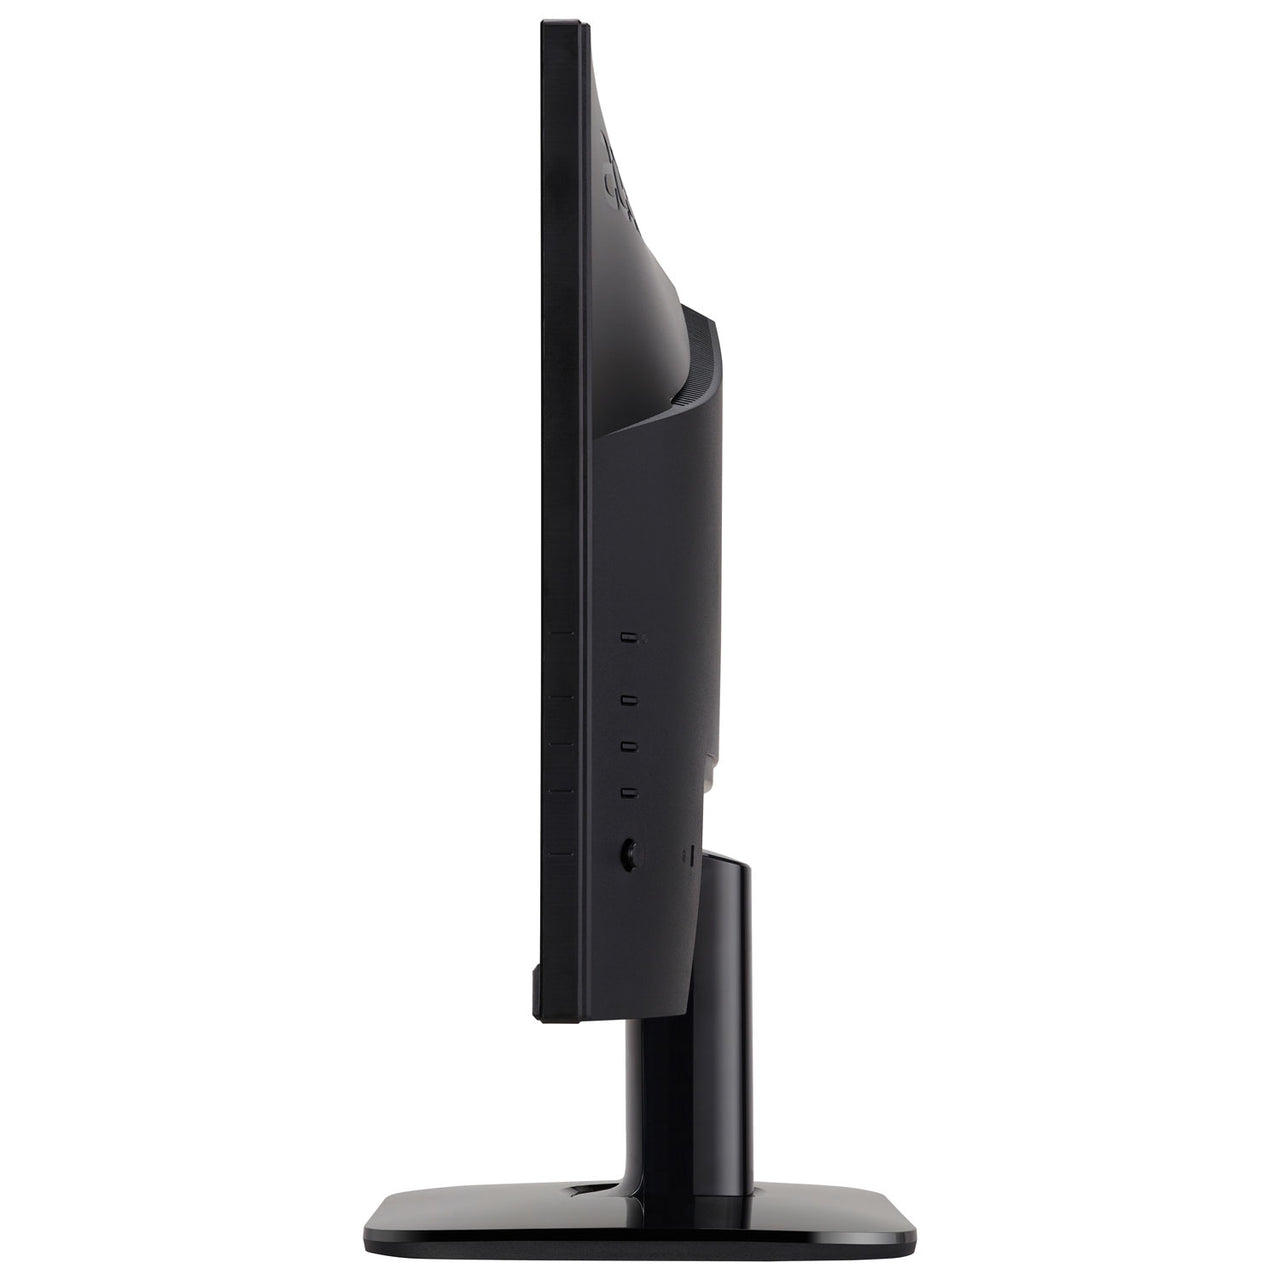 Acer 27" FHD 75Hz 1ms GTG IPS LED FreeSync Gaming Monitor (KA272) - Black